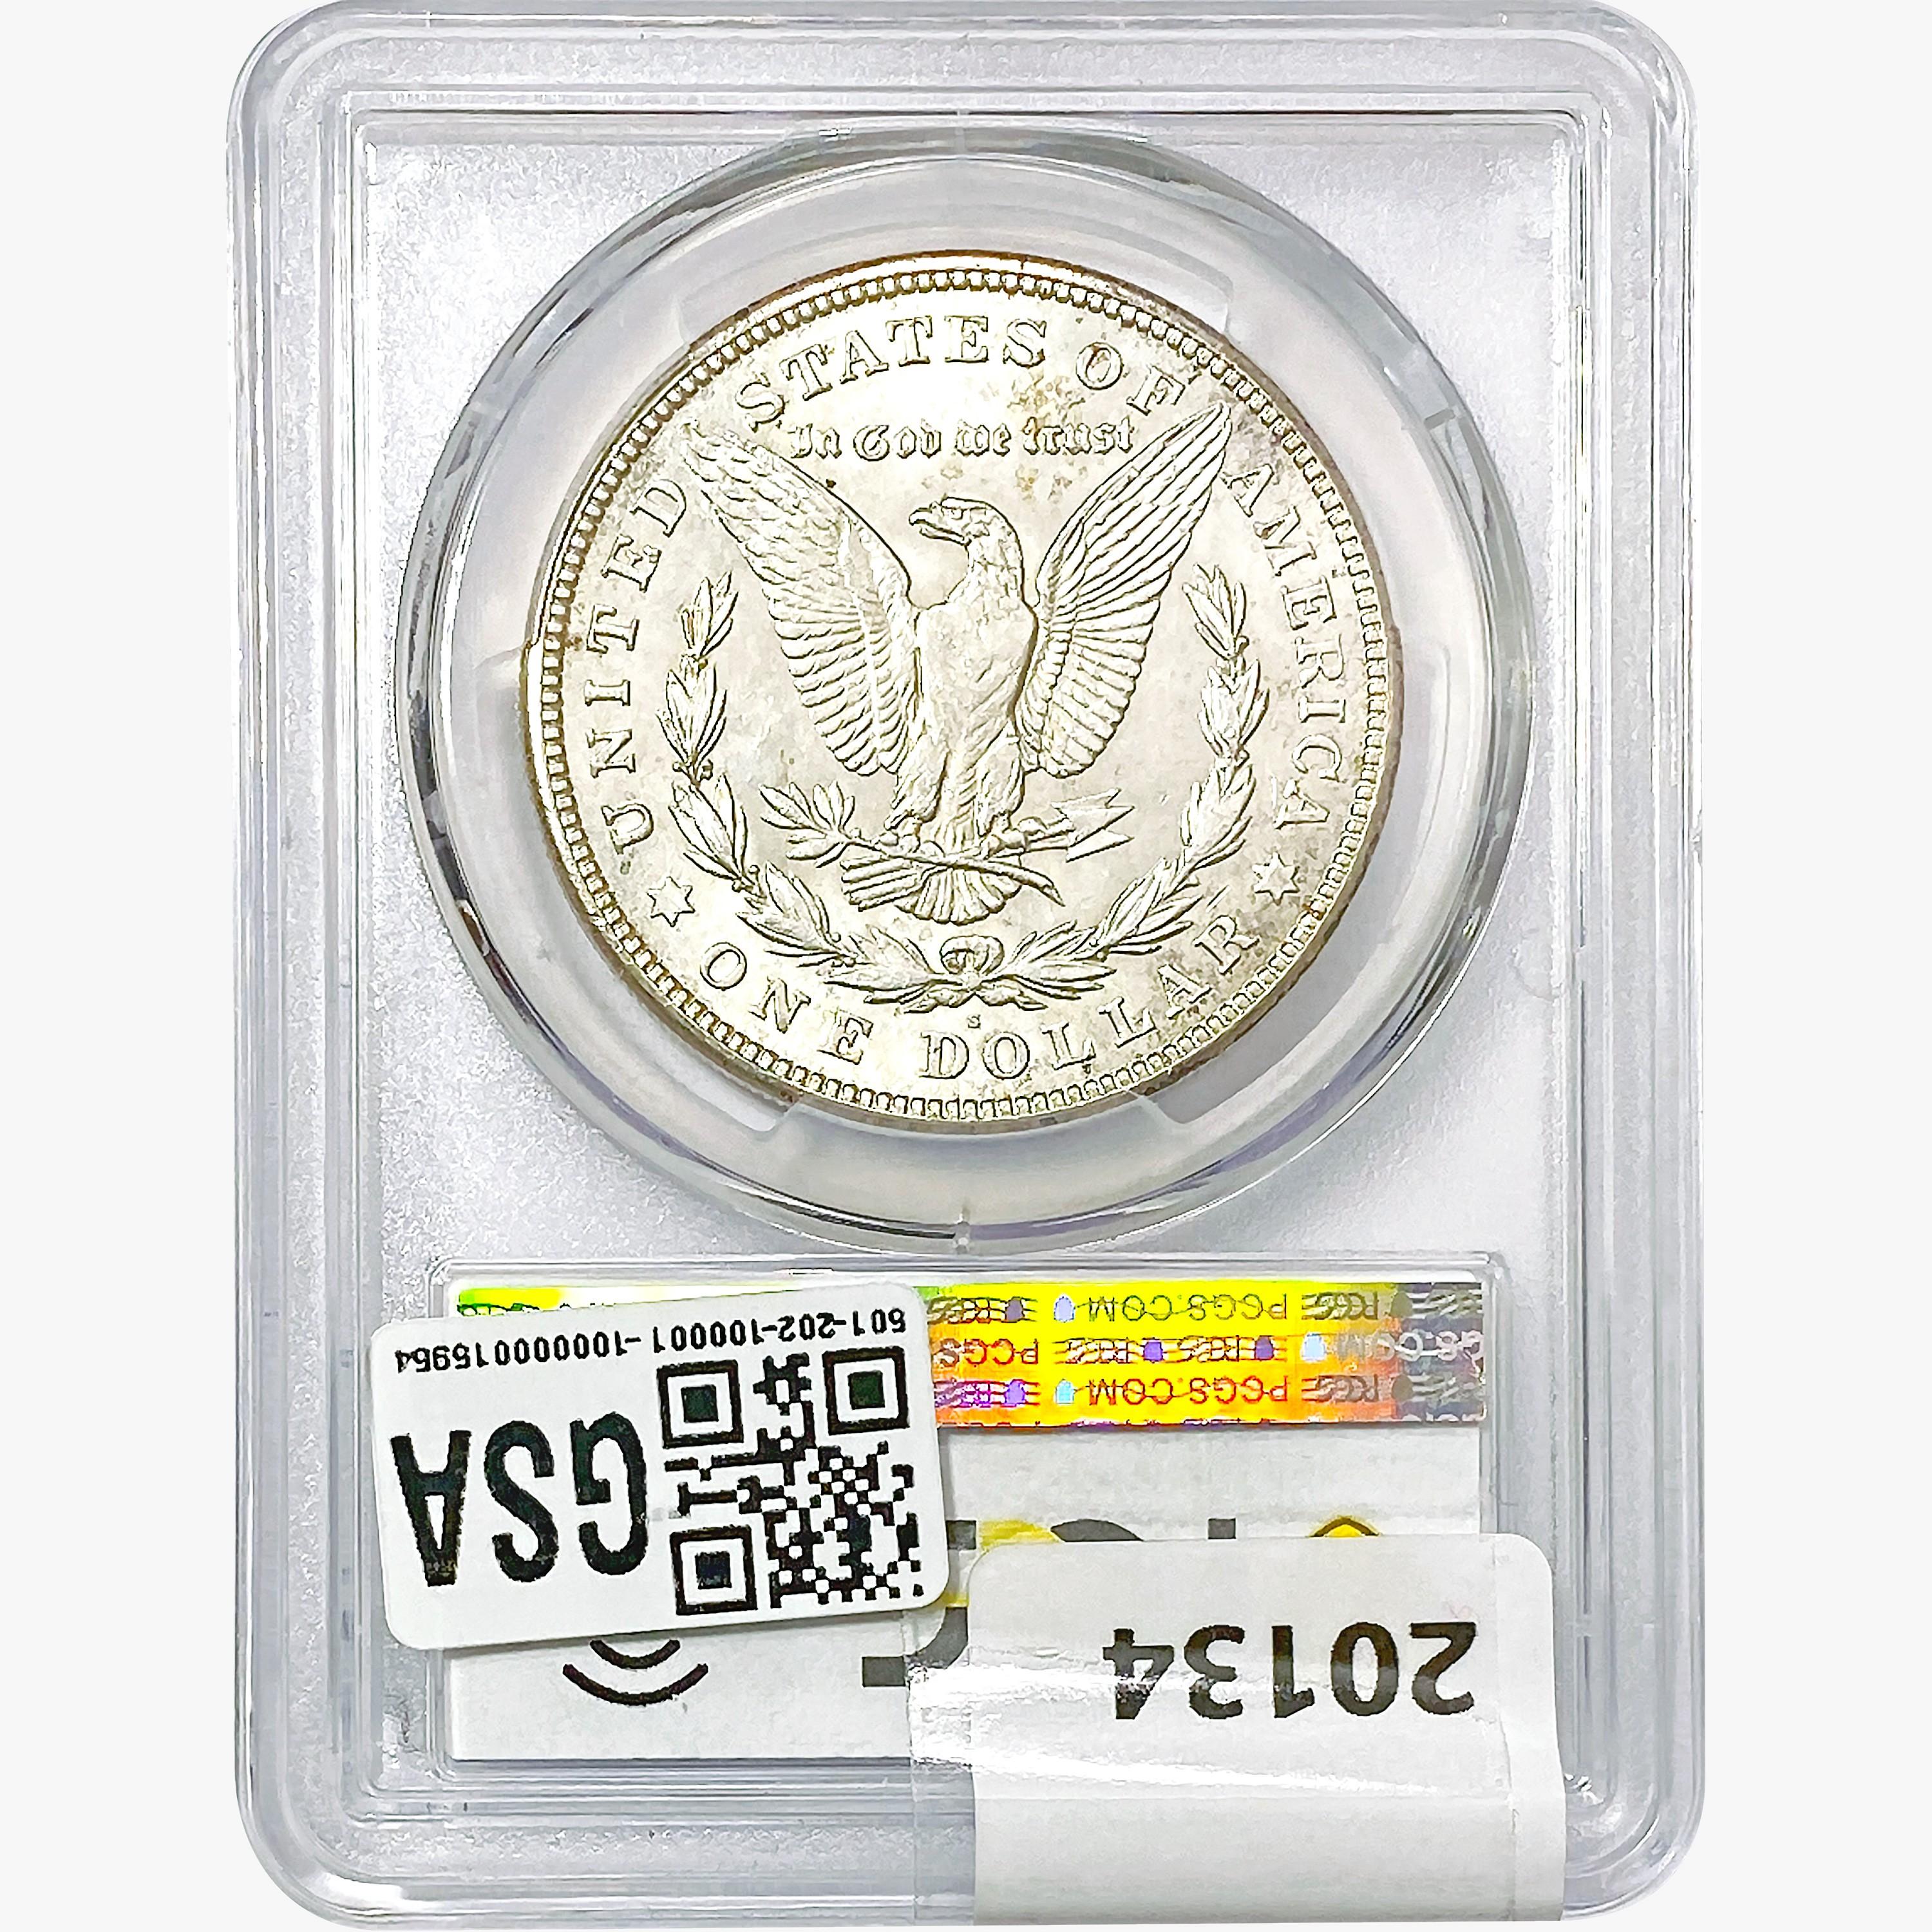 1921-S Morgan Silver Dollar PCGS MS64